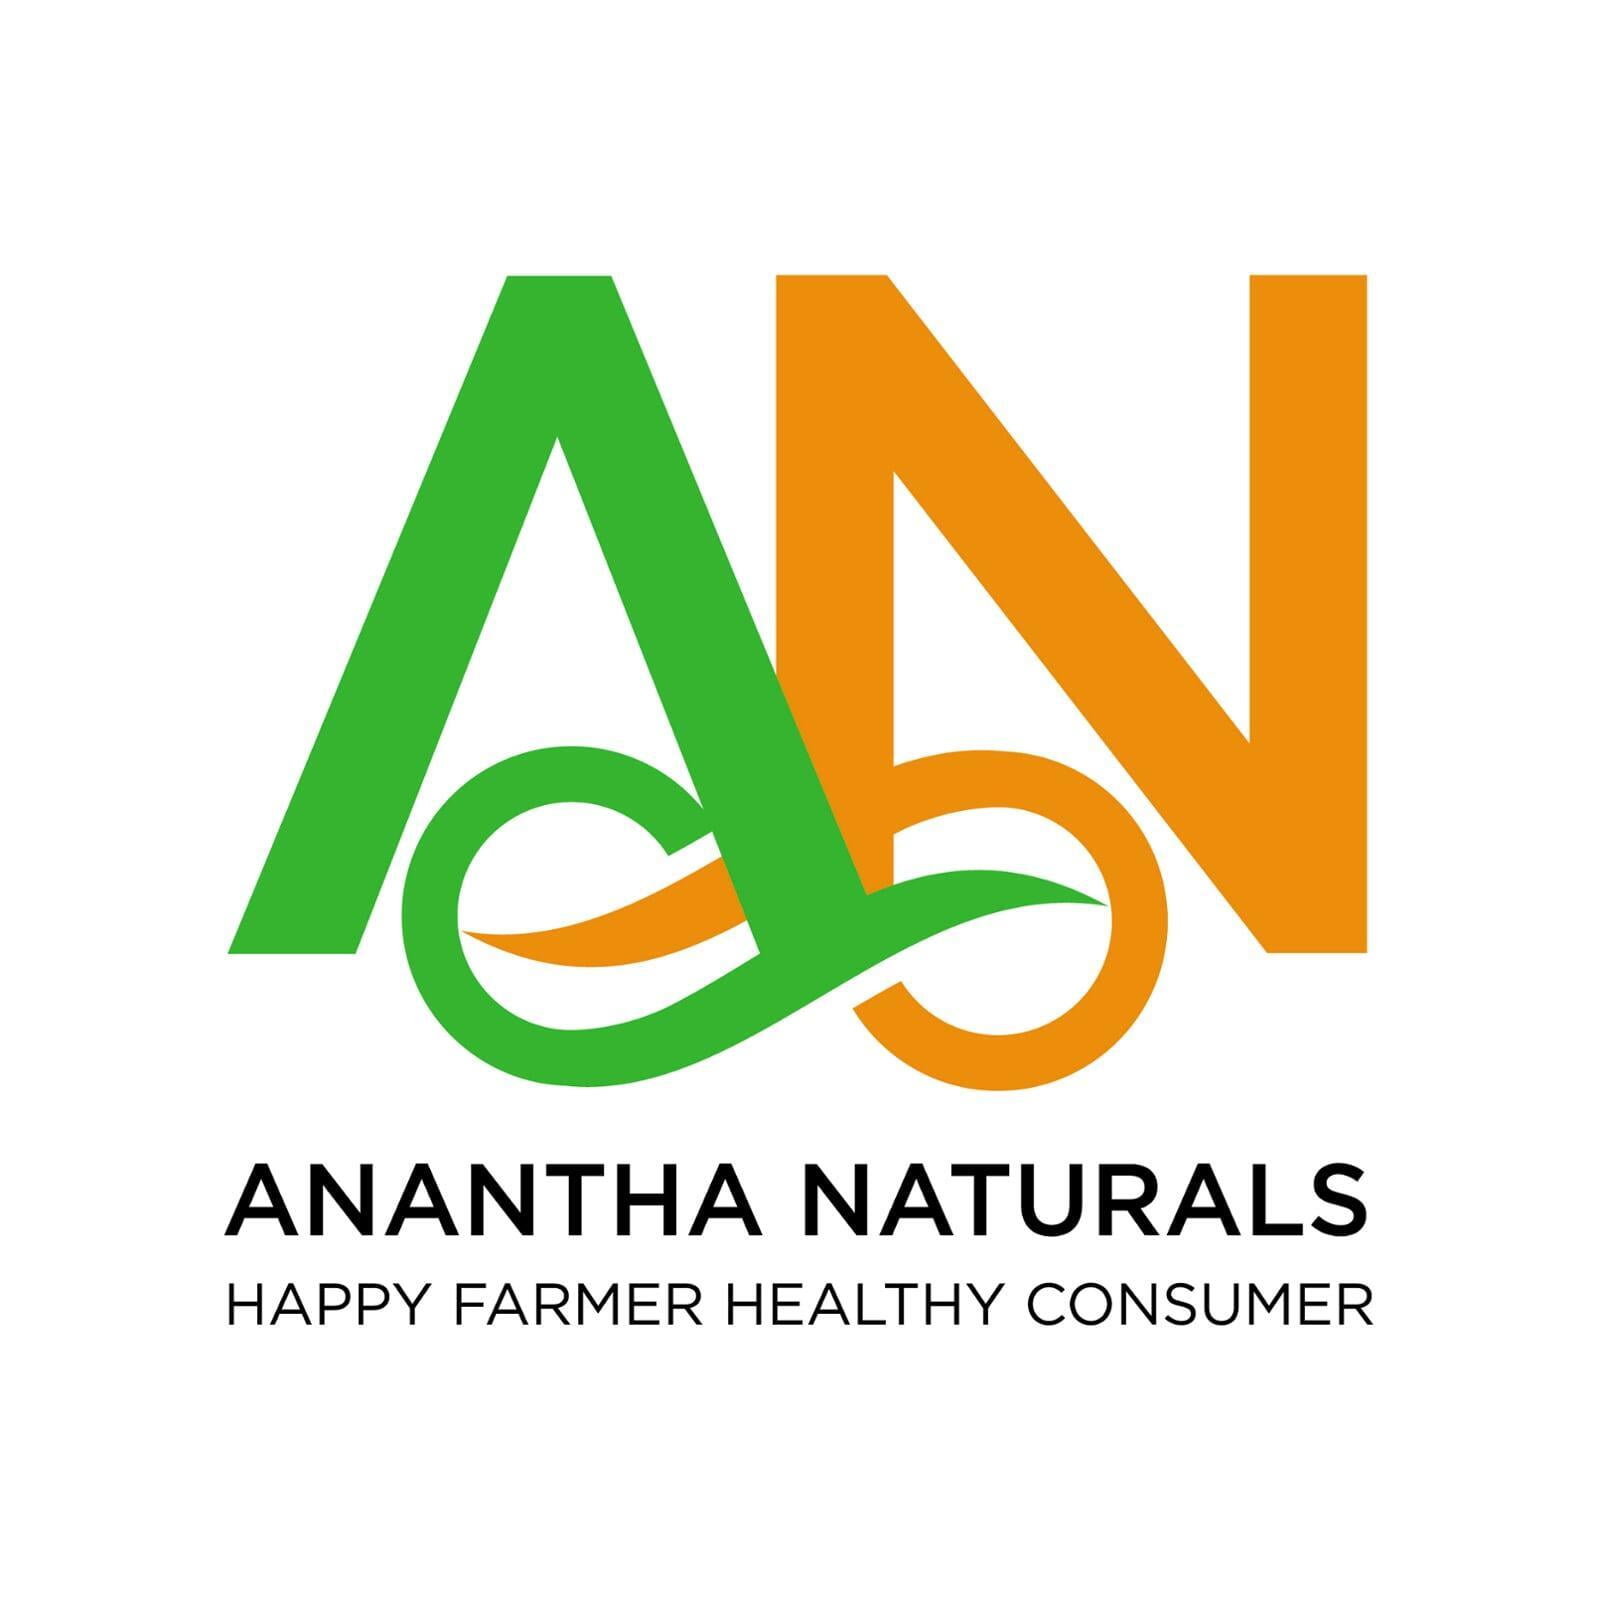 ANANTHA NATURALS